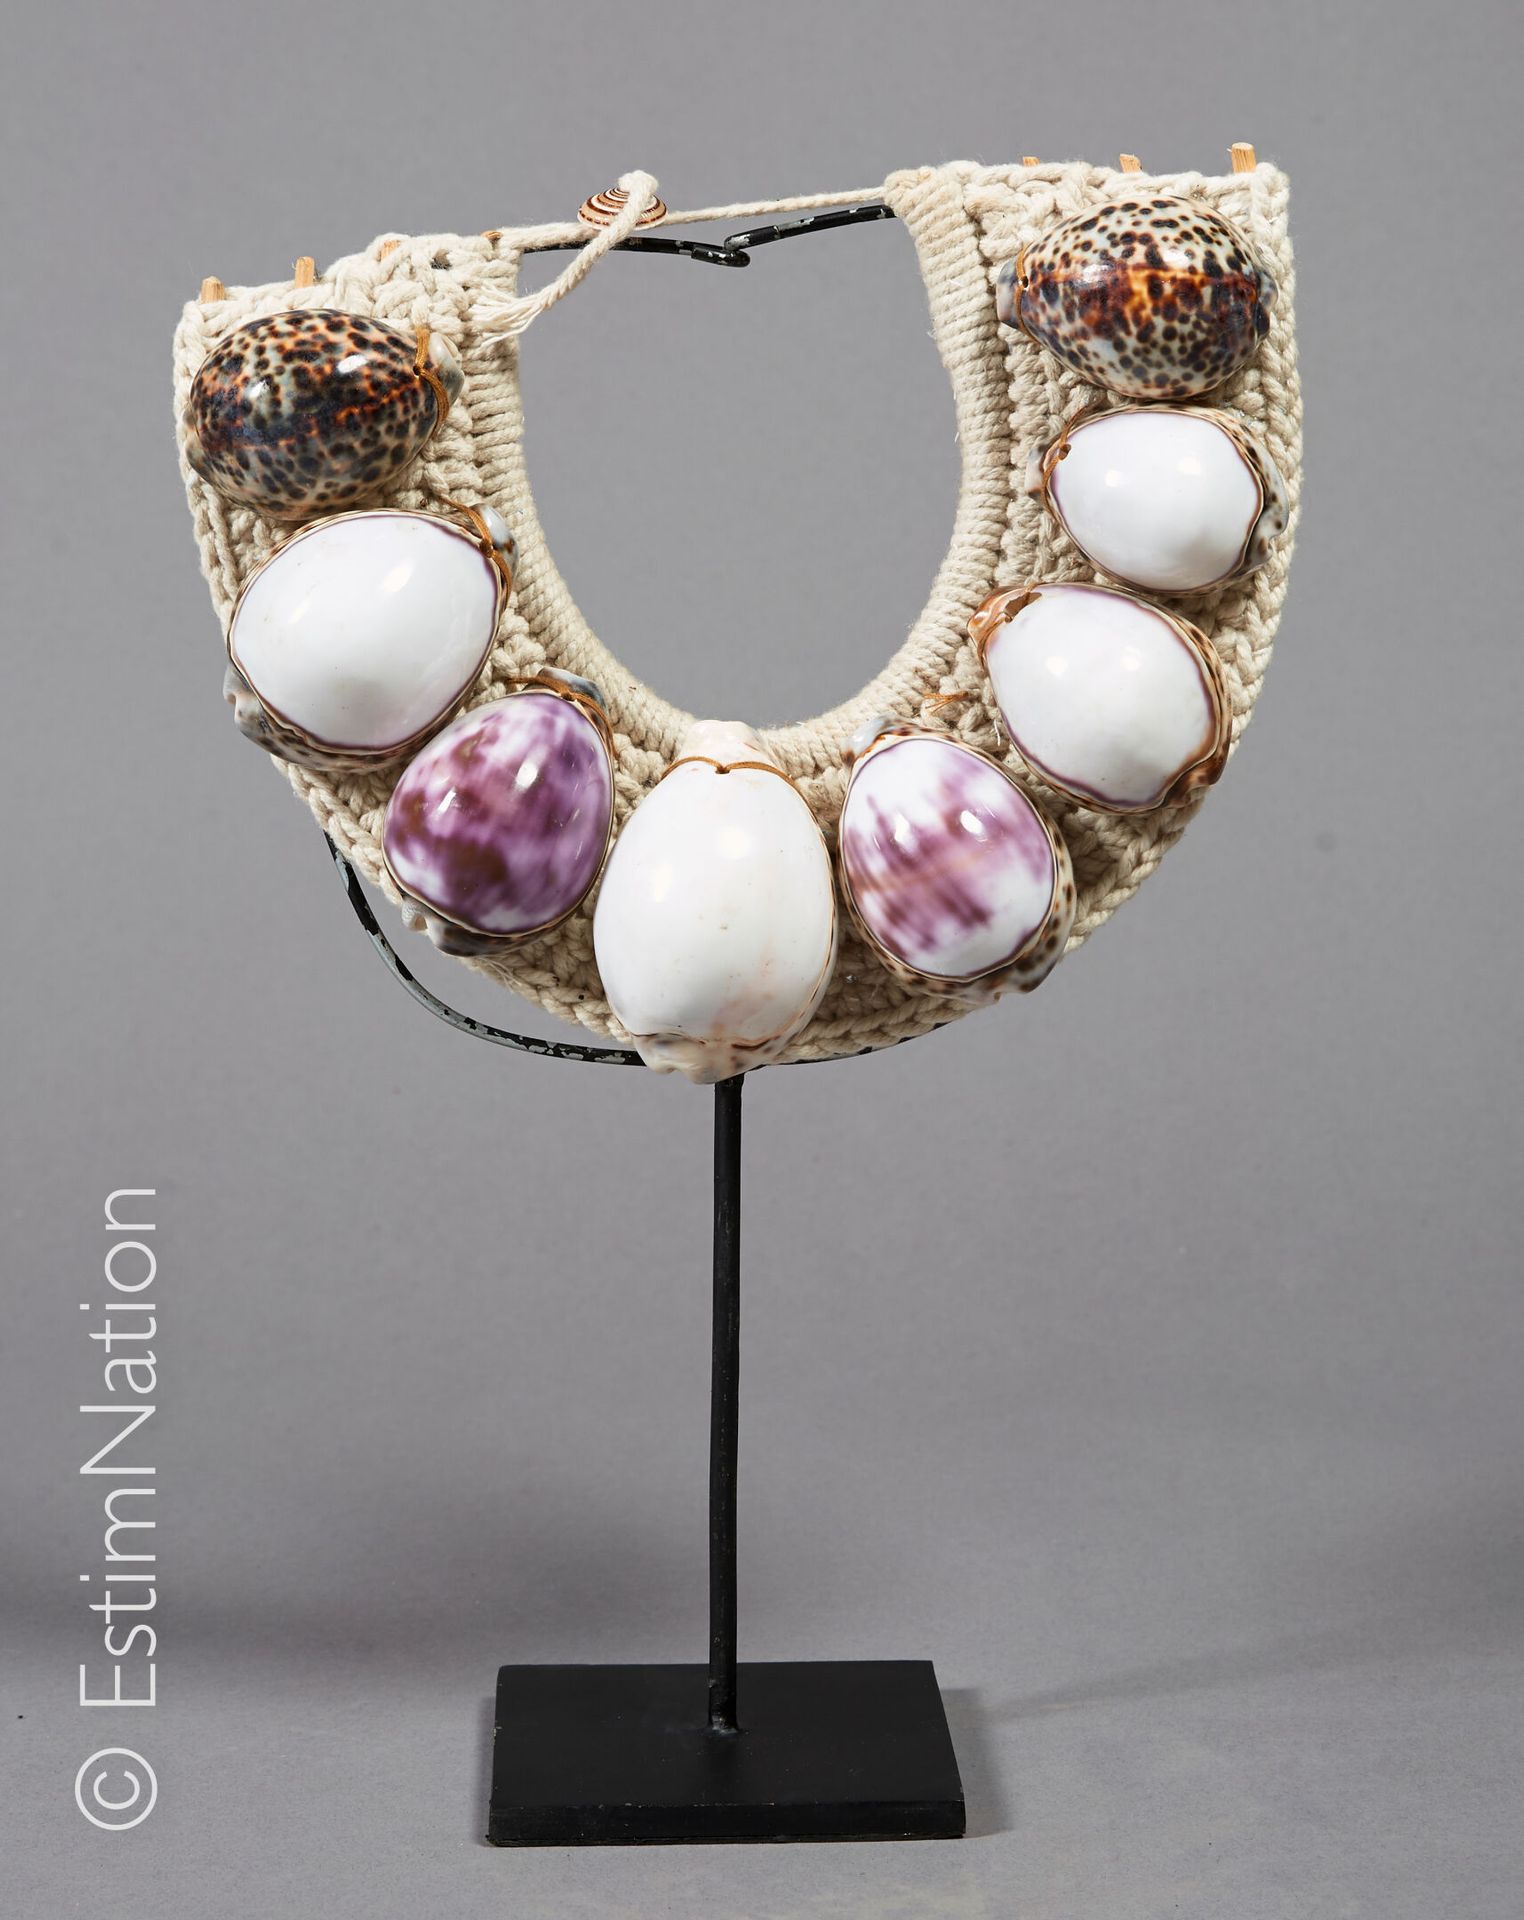 PAPOUASIE - NOUVELLE GUINEE 巴布亚 - 新几内亚



胸前的项链由编织的绳子搭在四个藤圈上，装饰着八个白色、紫色和斑点的大贝壳。扣&hellip;